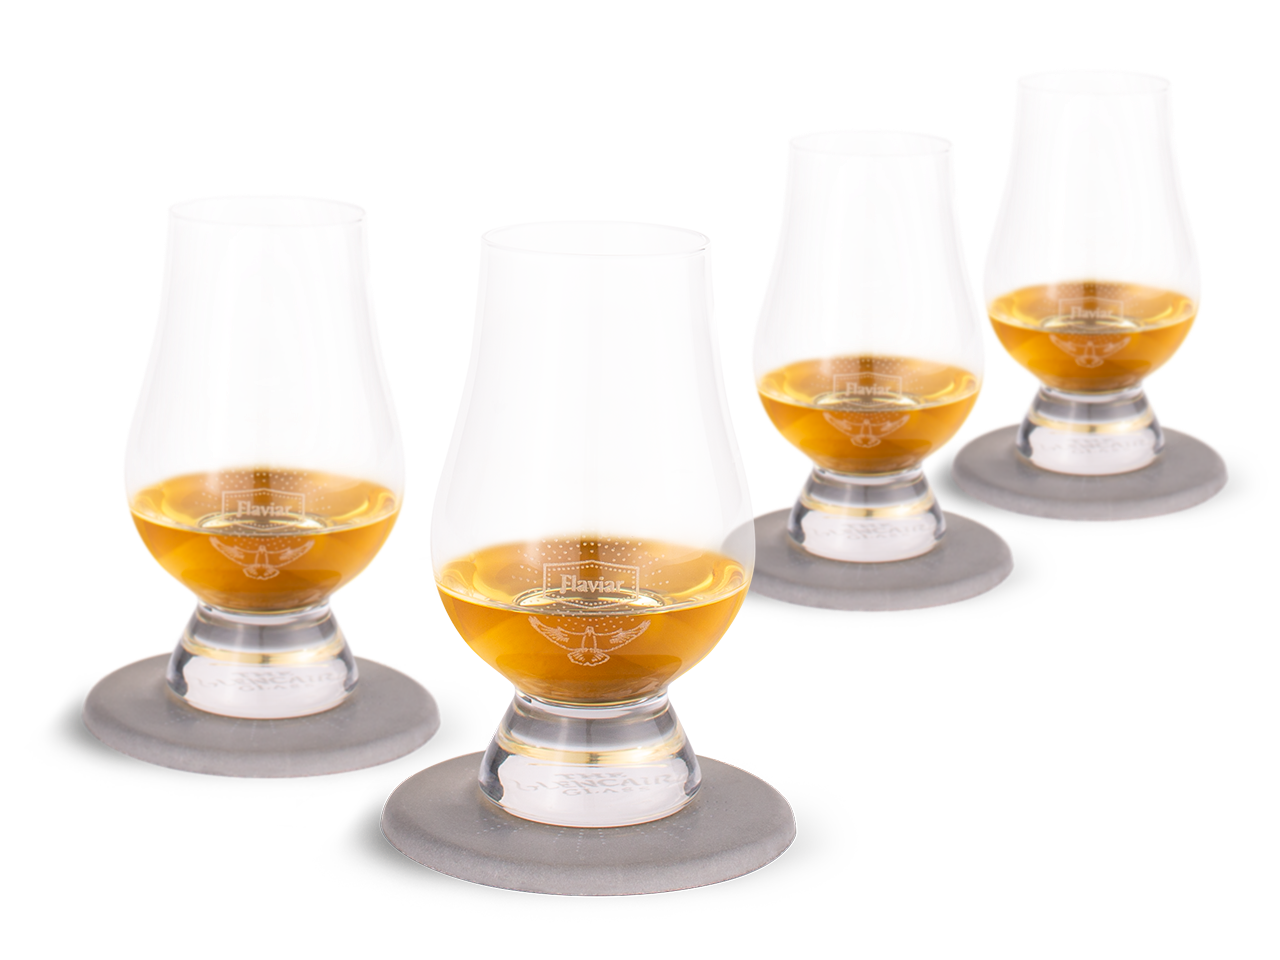 4 Flaviar Whisky Glasses & Coasters